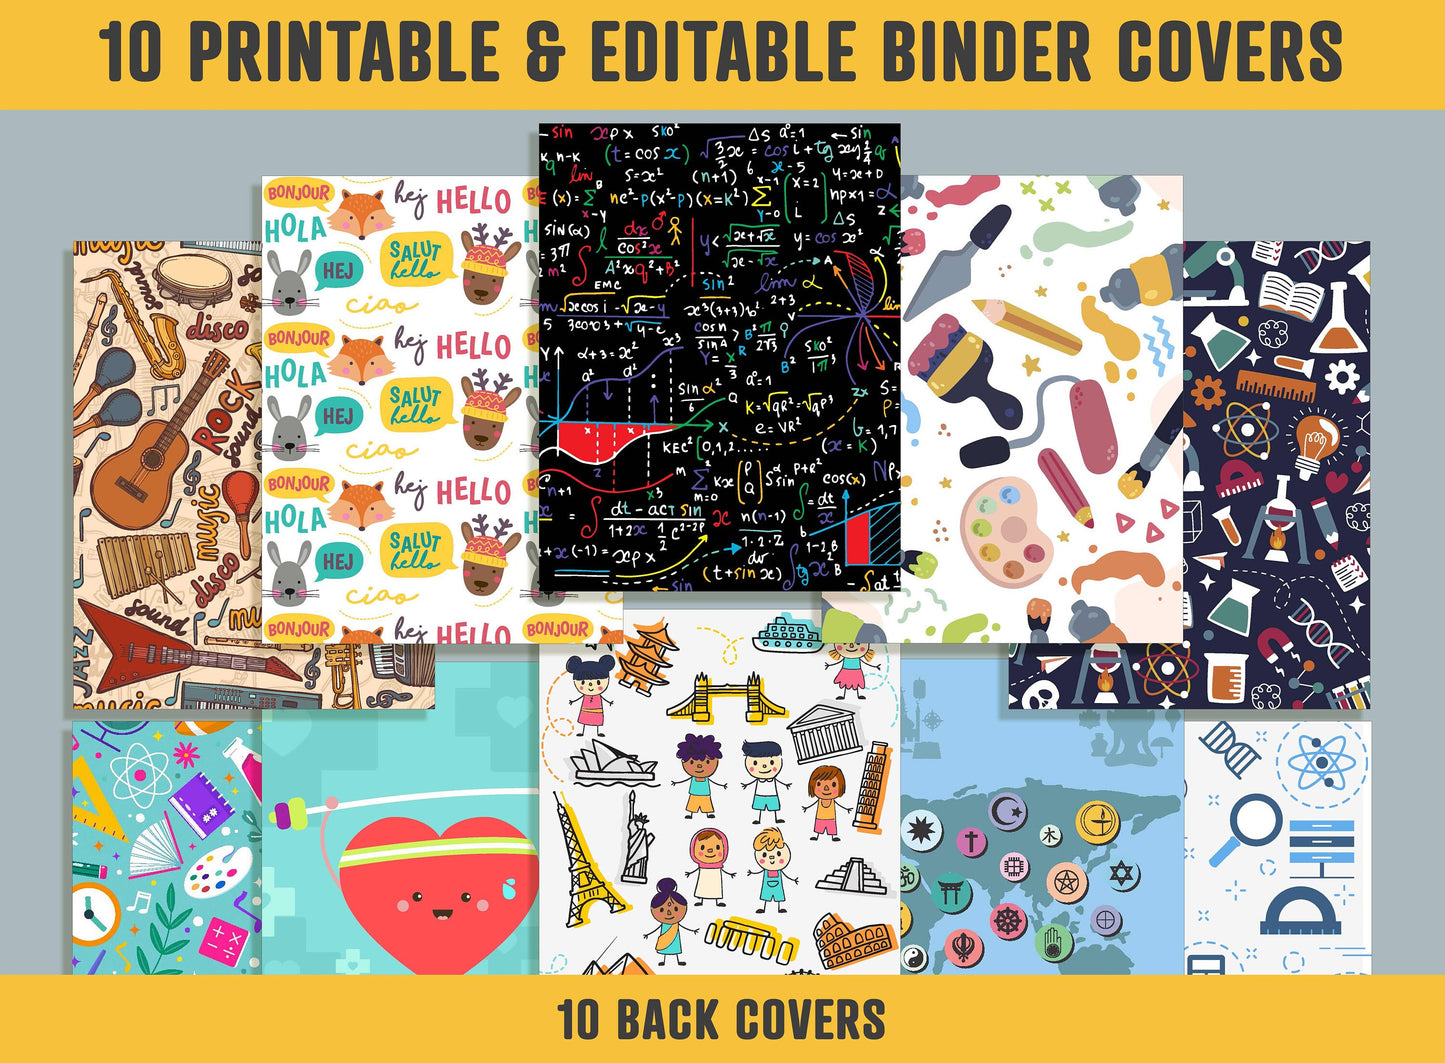 Subject Binder Covers, 10 Printable & Editable Binder Covers+Spines, Teacher/School Planner Template/Label/Insert, Subject Cover for Folder